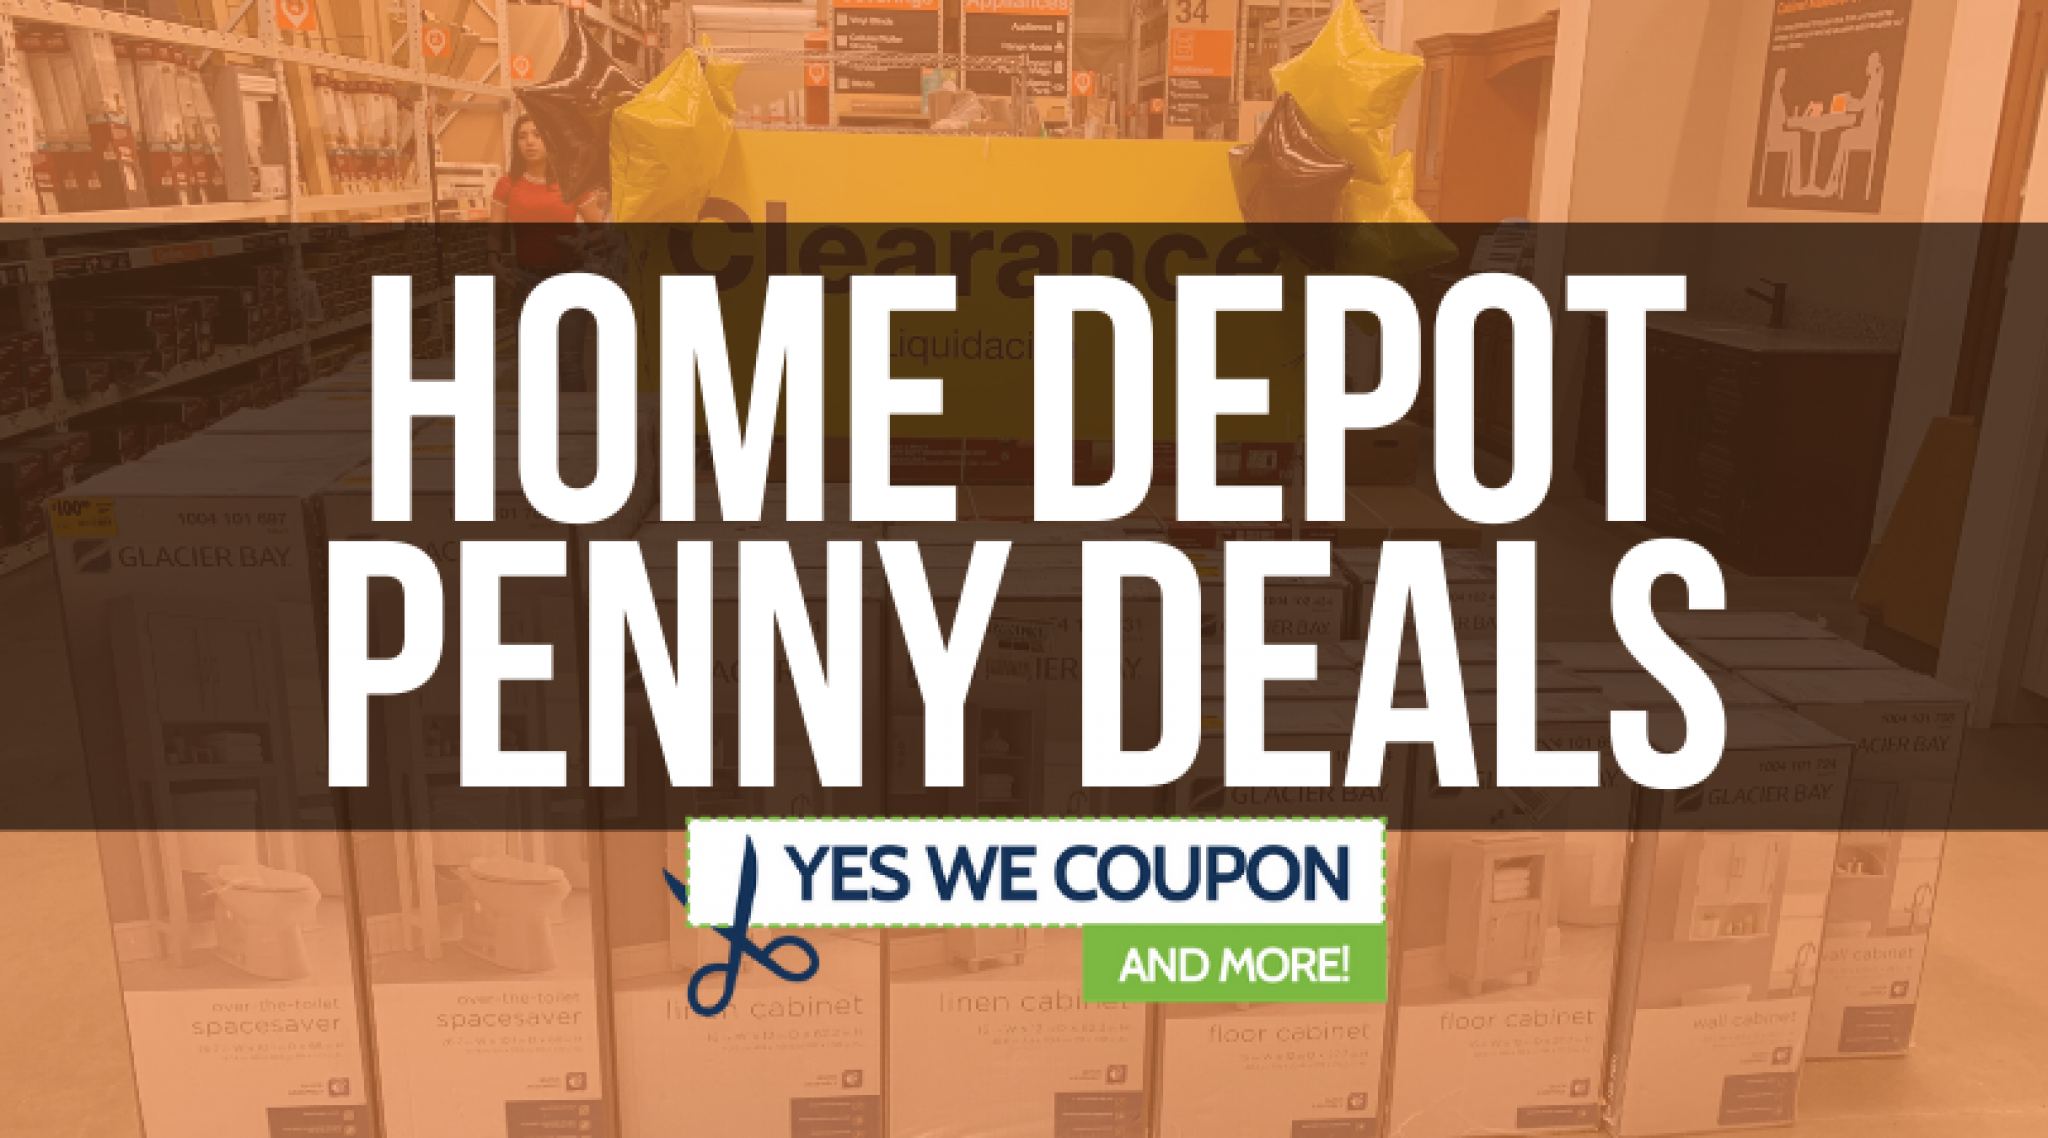 Home Depot Penny Deals Group! Glitchndealz